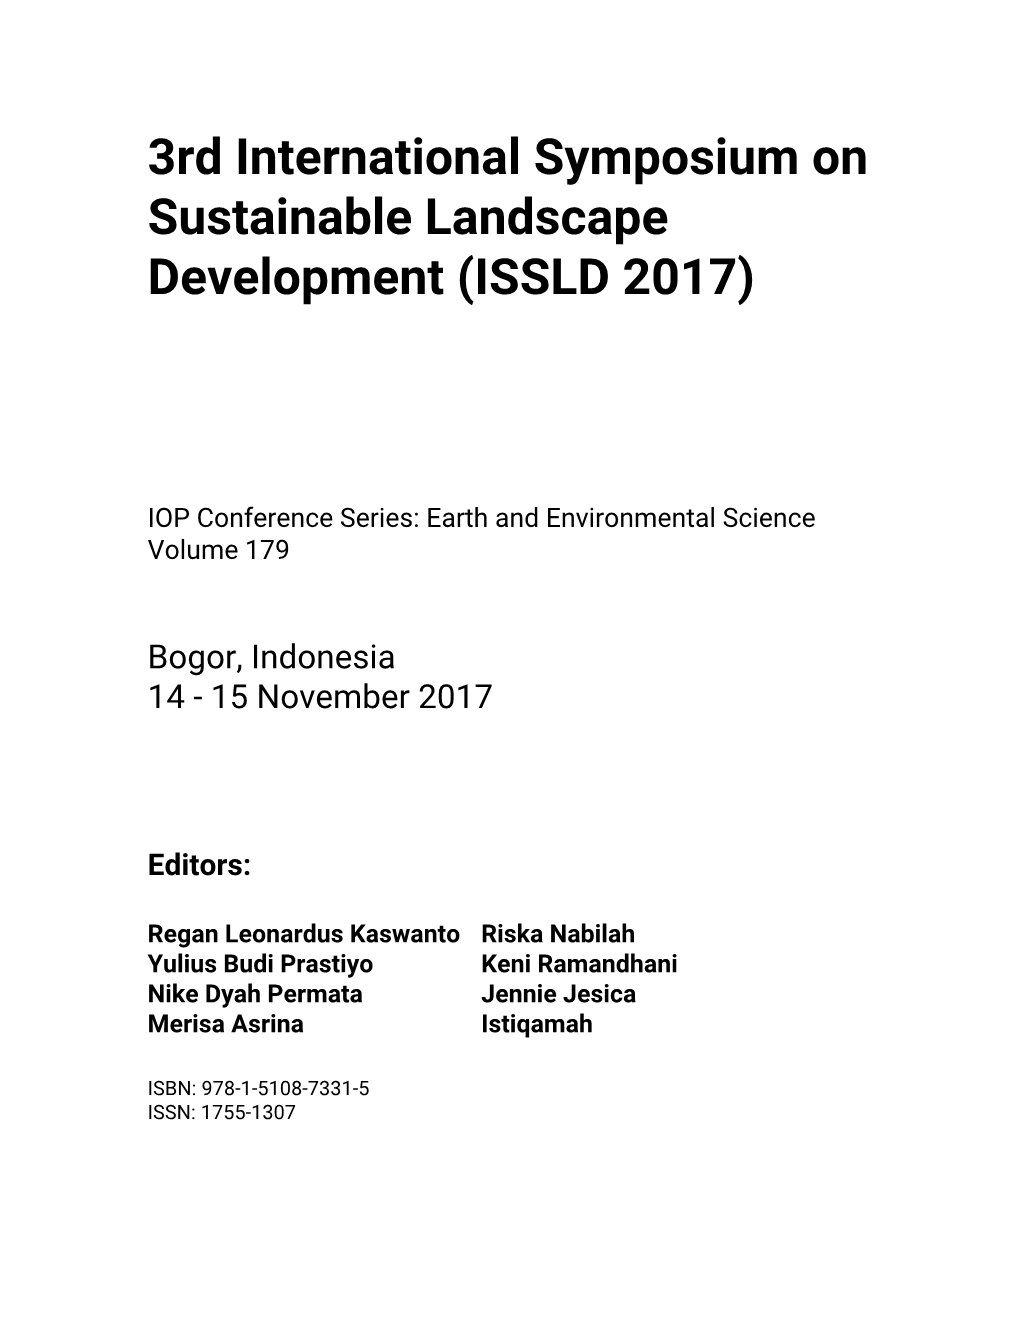 3Rd International Symposium on Sustainable Landscape Development (ISSLD 2017)